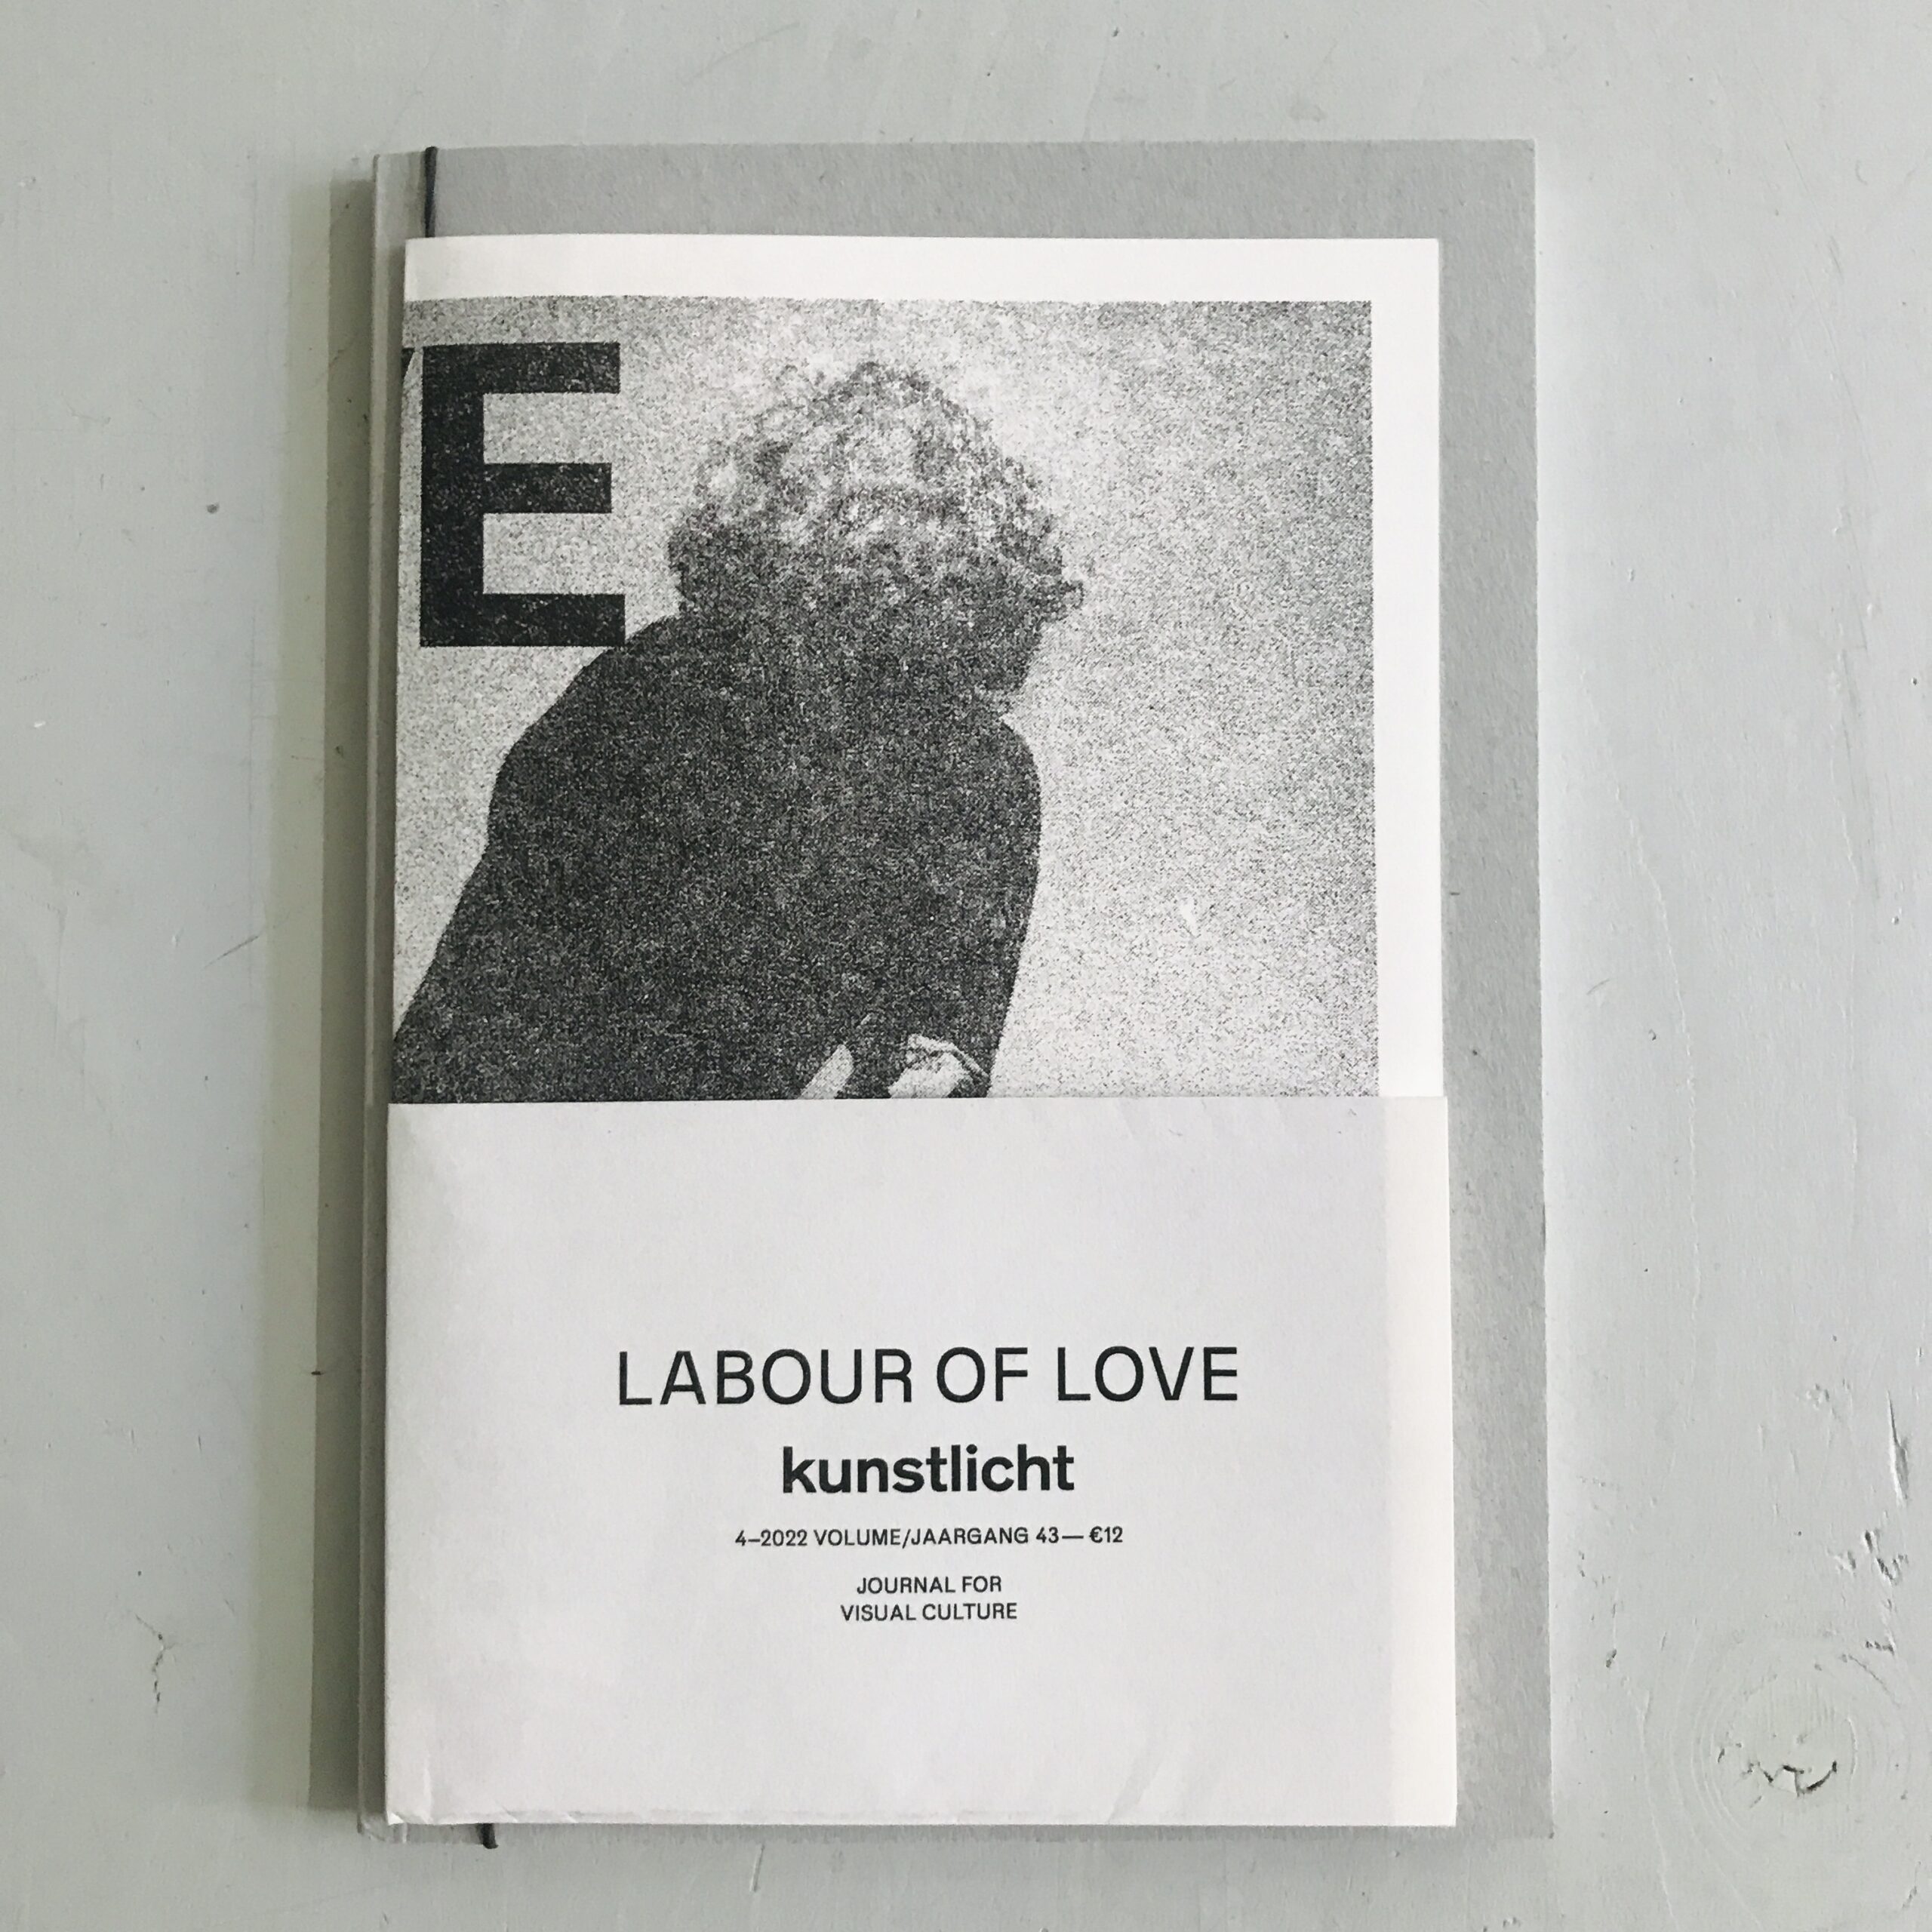 Love is a Daily Practice/Kunstlicht – Rosa de Graaf in conversation with Suzanne Weenink